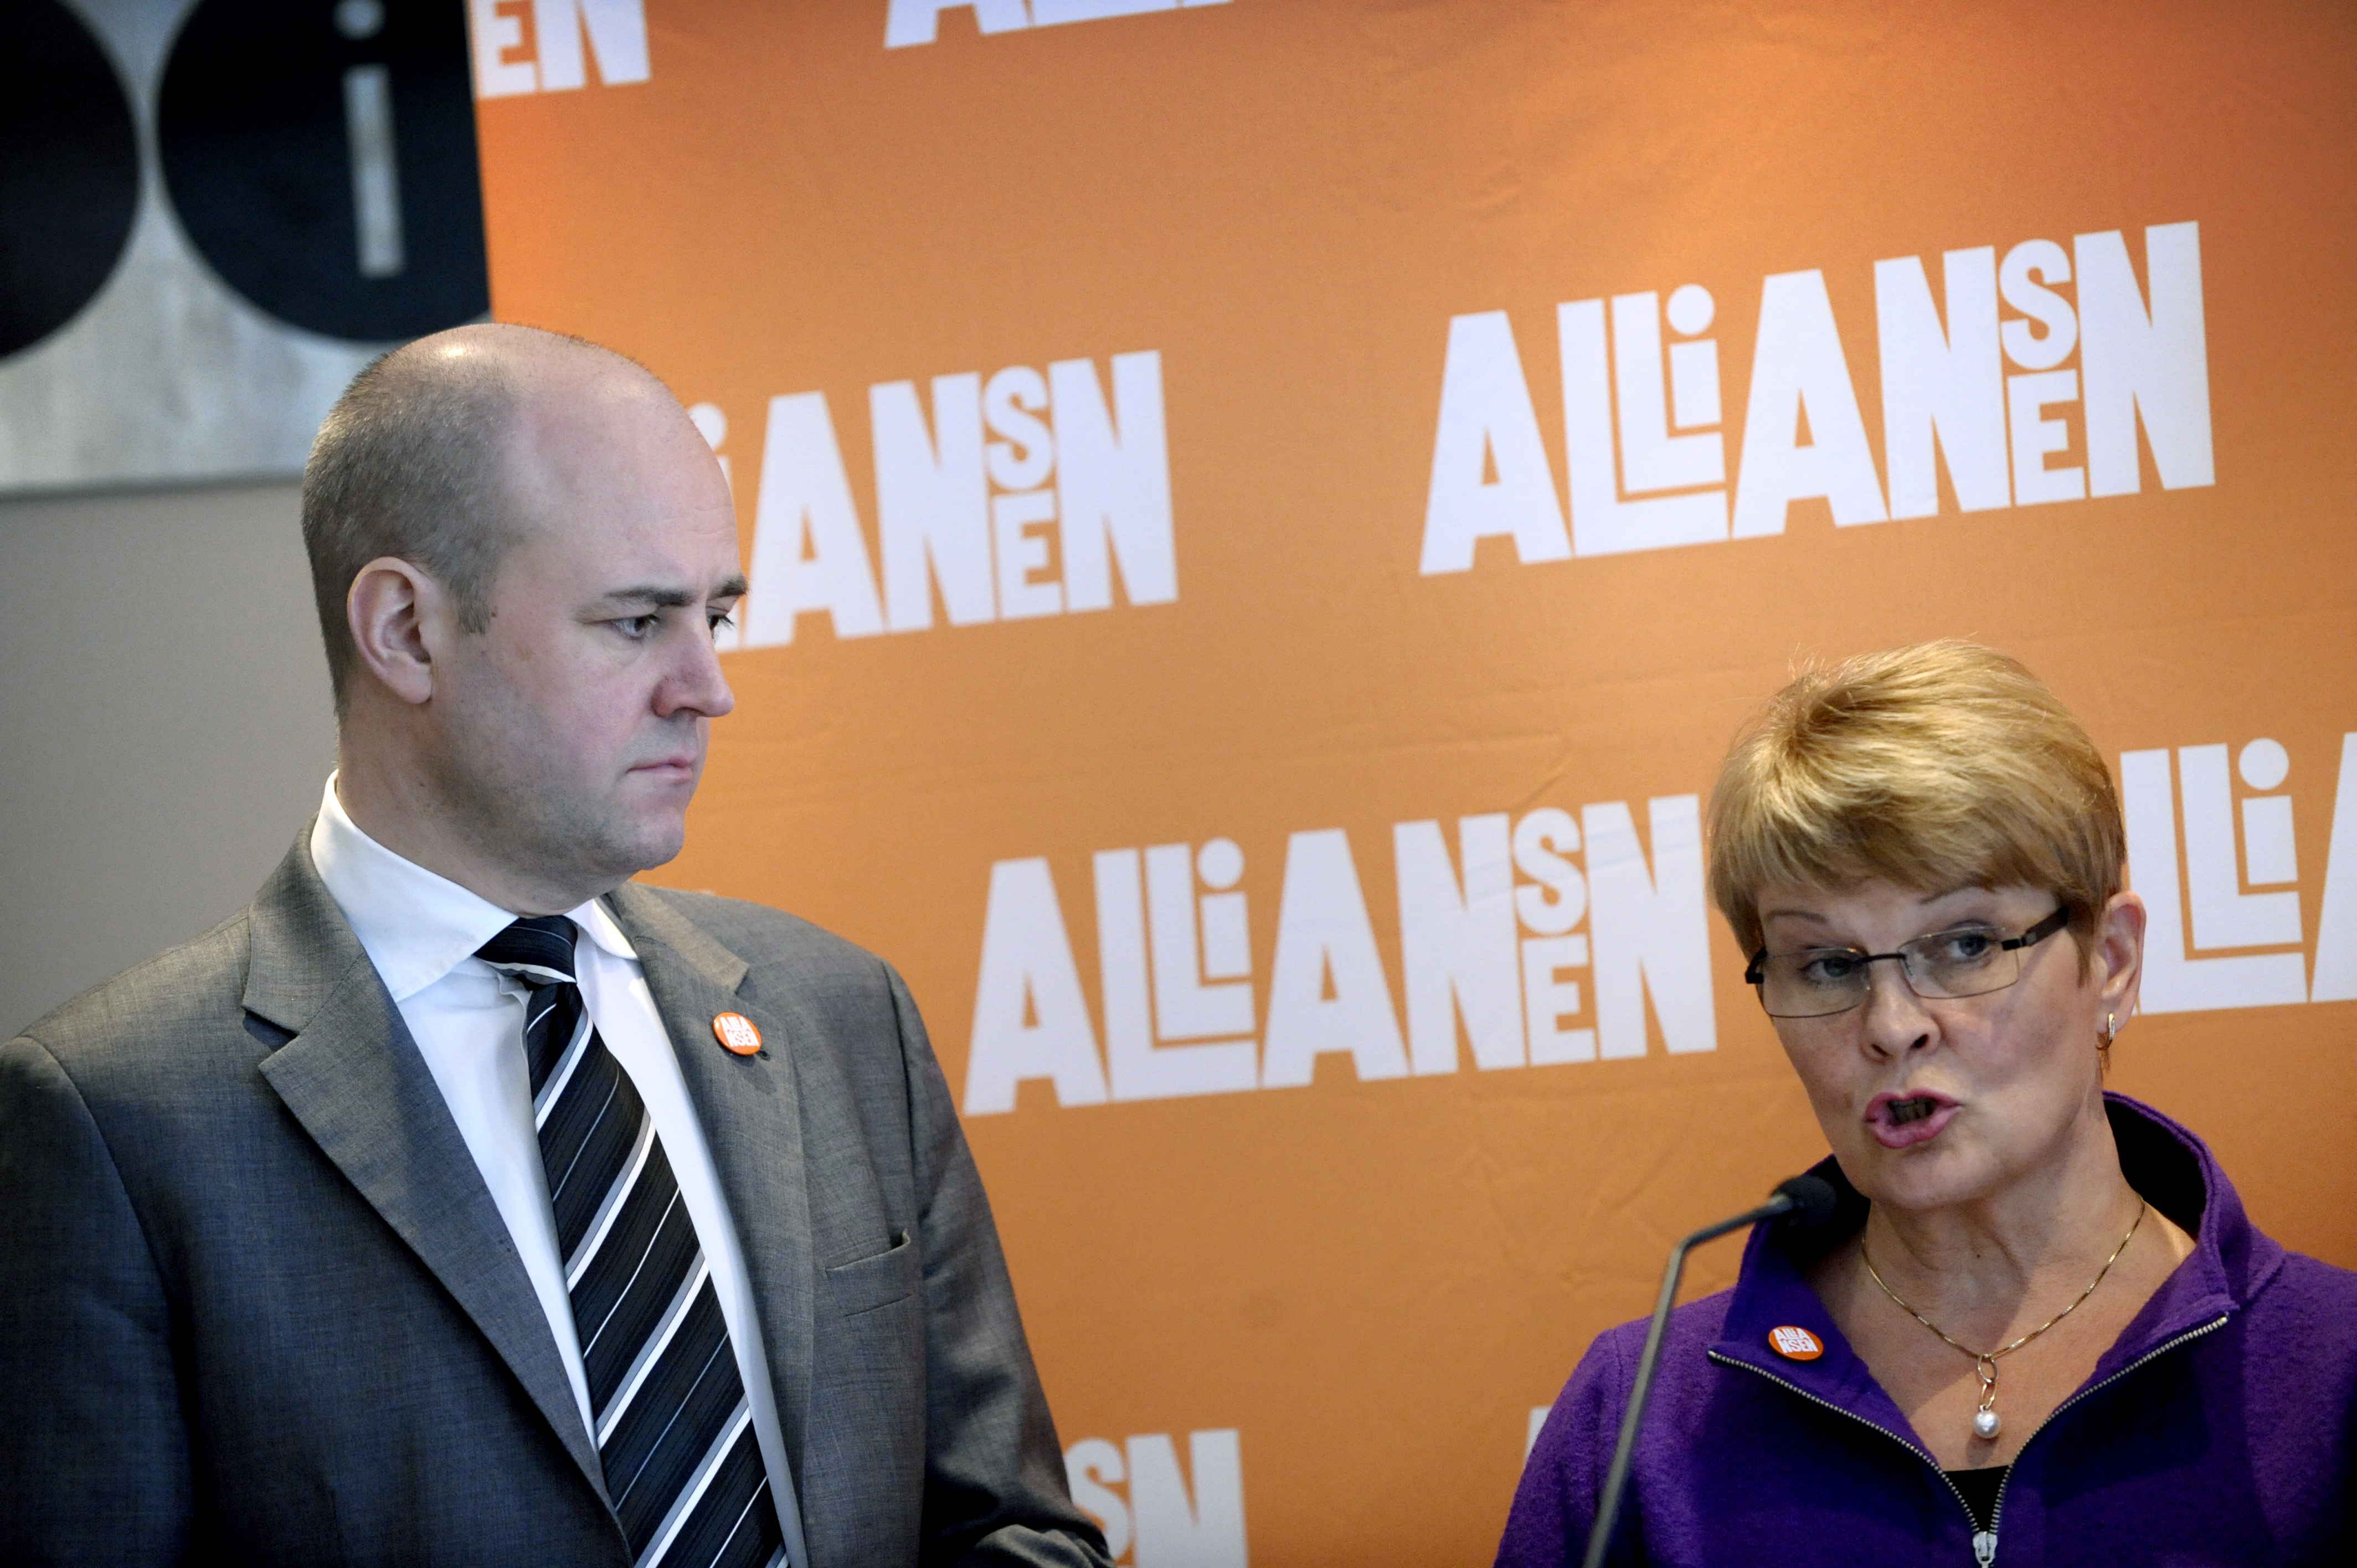 Alliansen, Centerpartiet, Riksdagsvalet 2010, Fredrik Reinfeldt, Moderaterna, Maud Olofsson, Regeringen